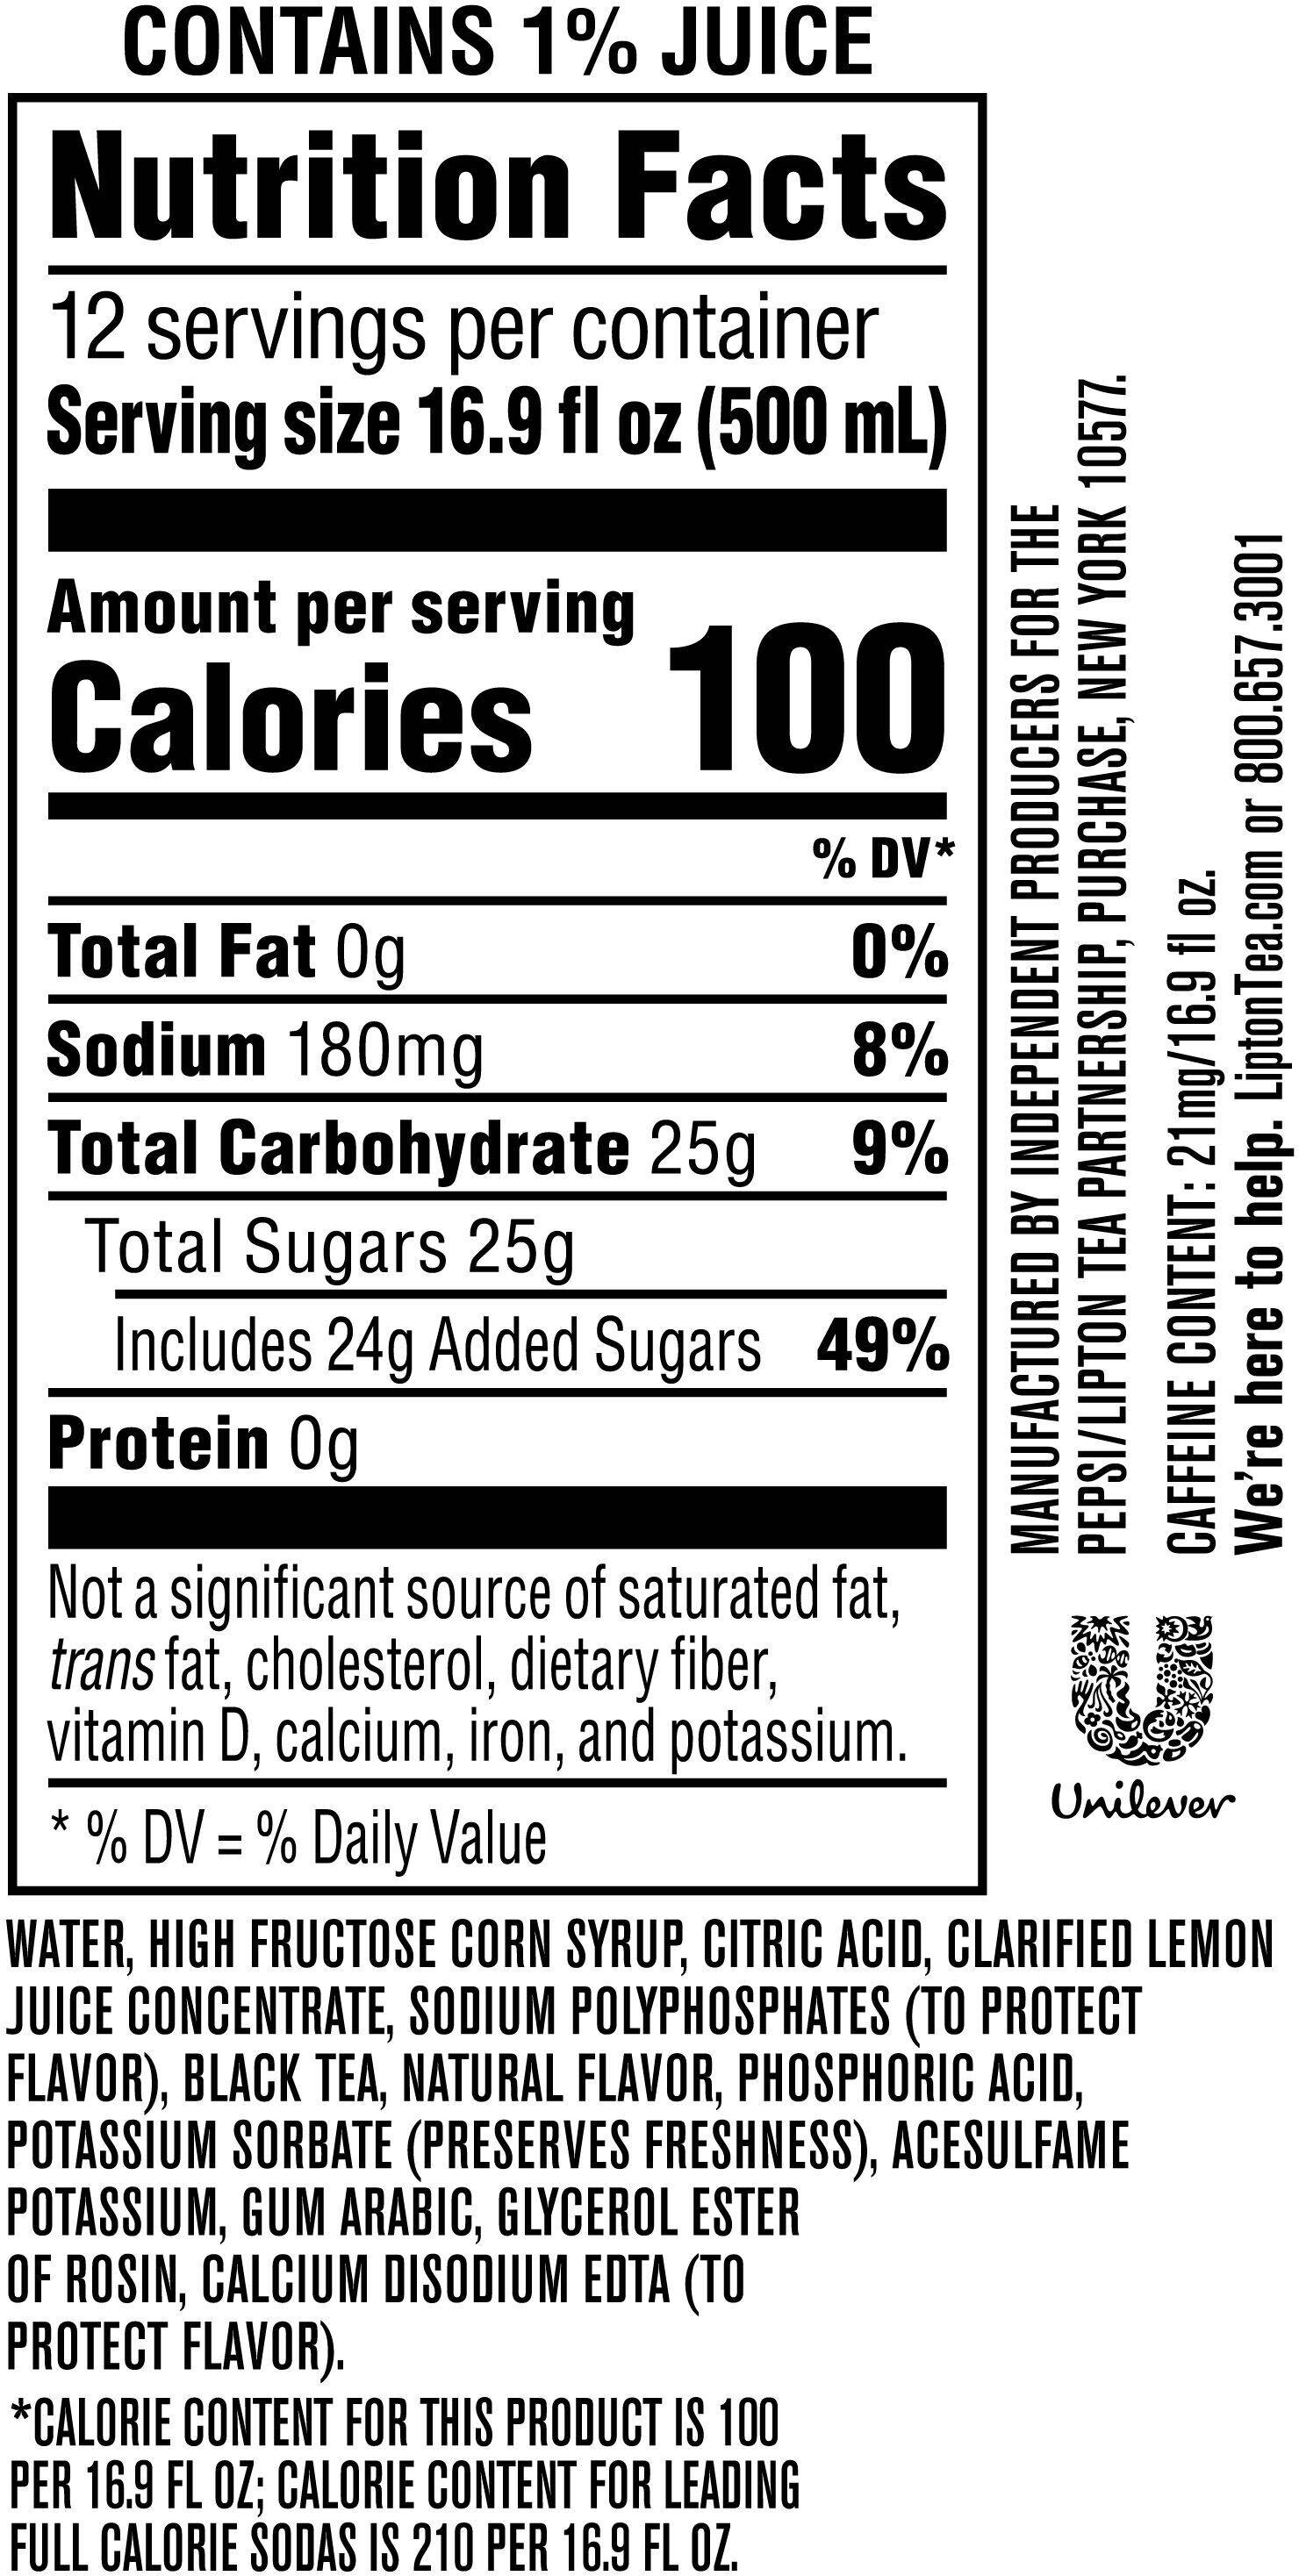 Image describing nutrition information for product Lipton Iced Tea Lemonade